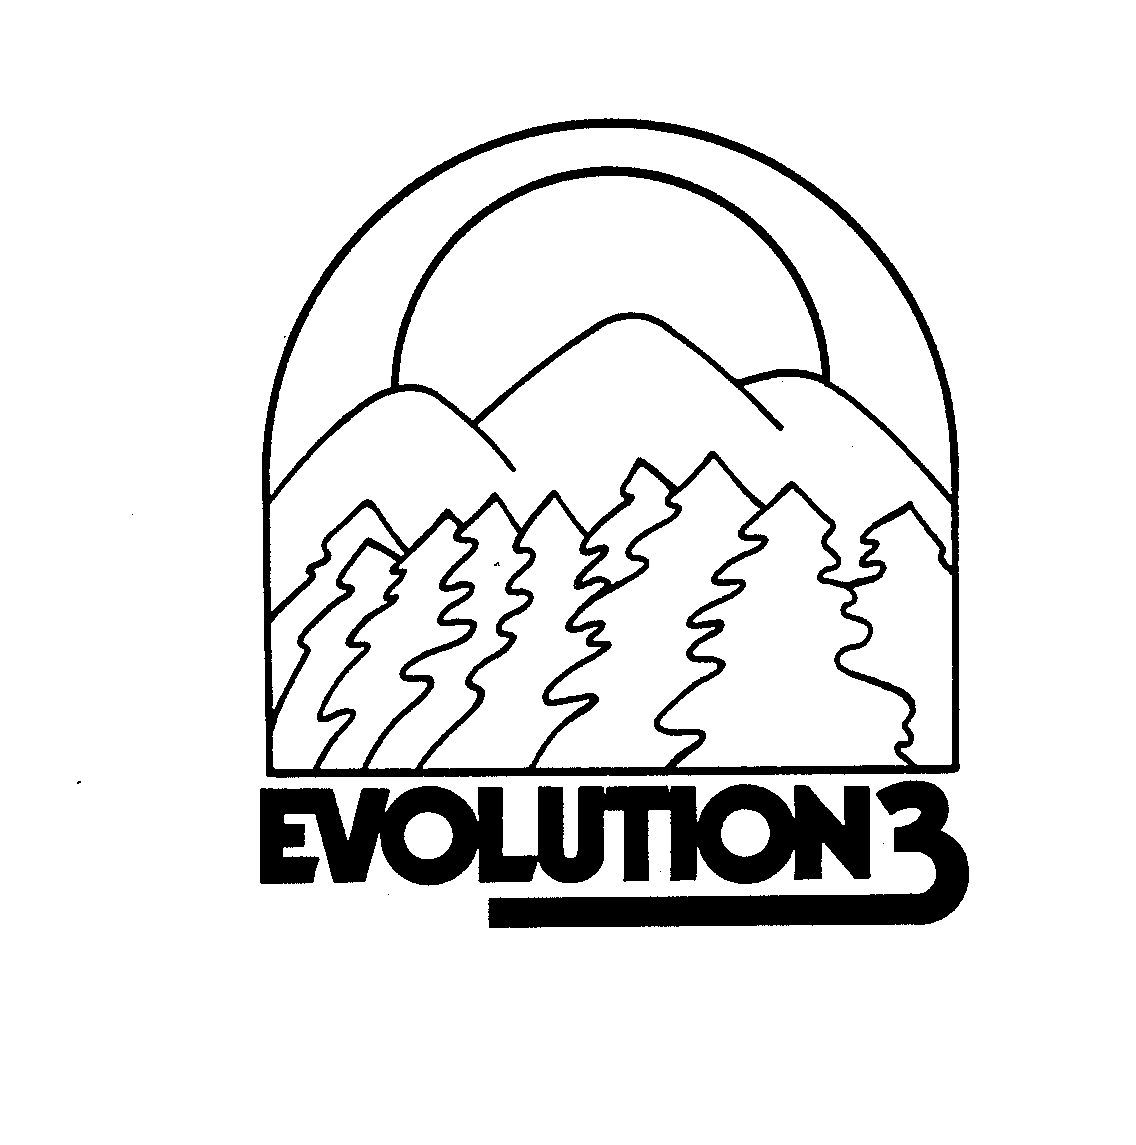  EVOLUTION 3